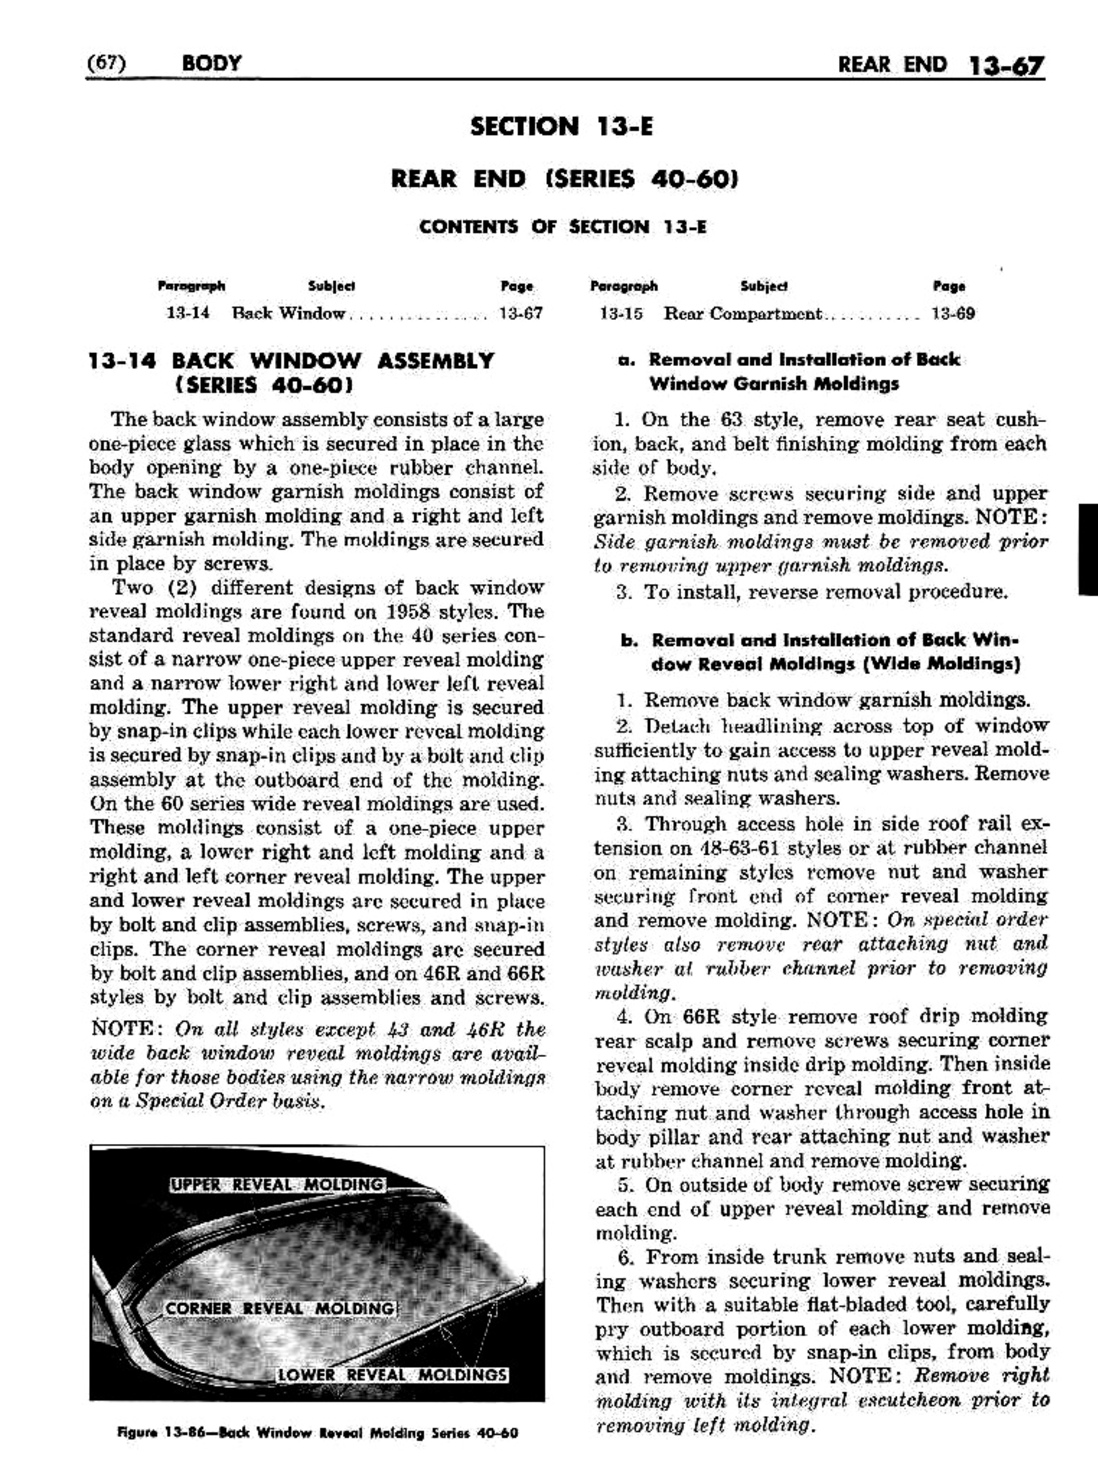 n_1958 Buick Body Service Manual-068-068.jpg